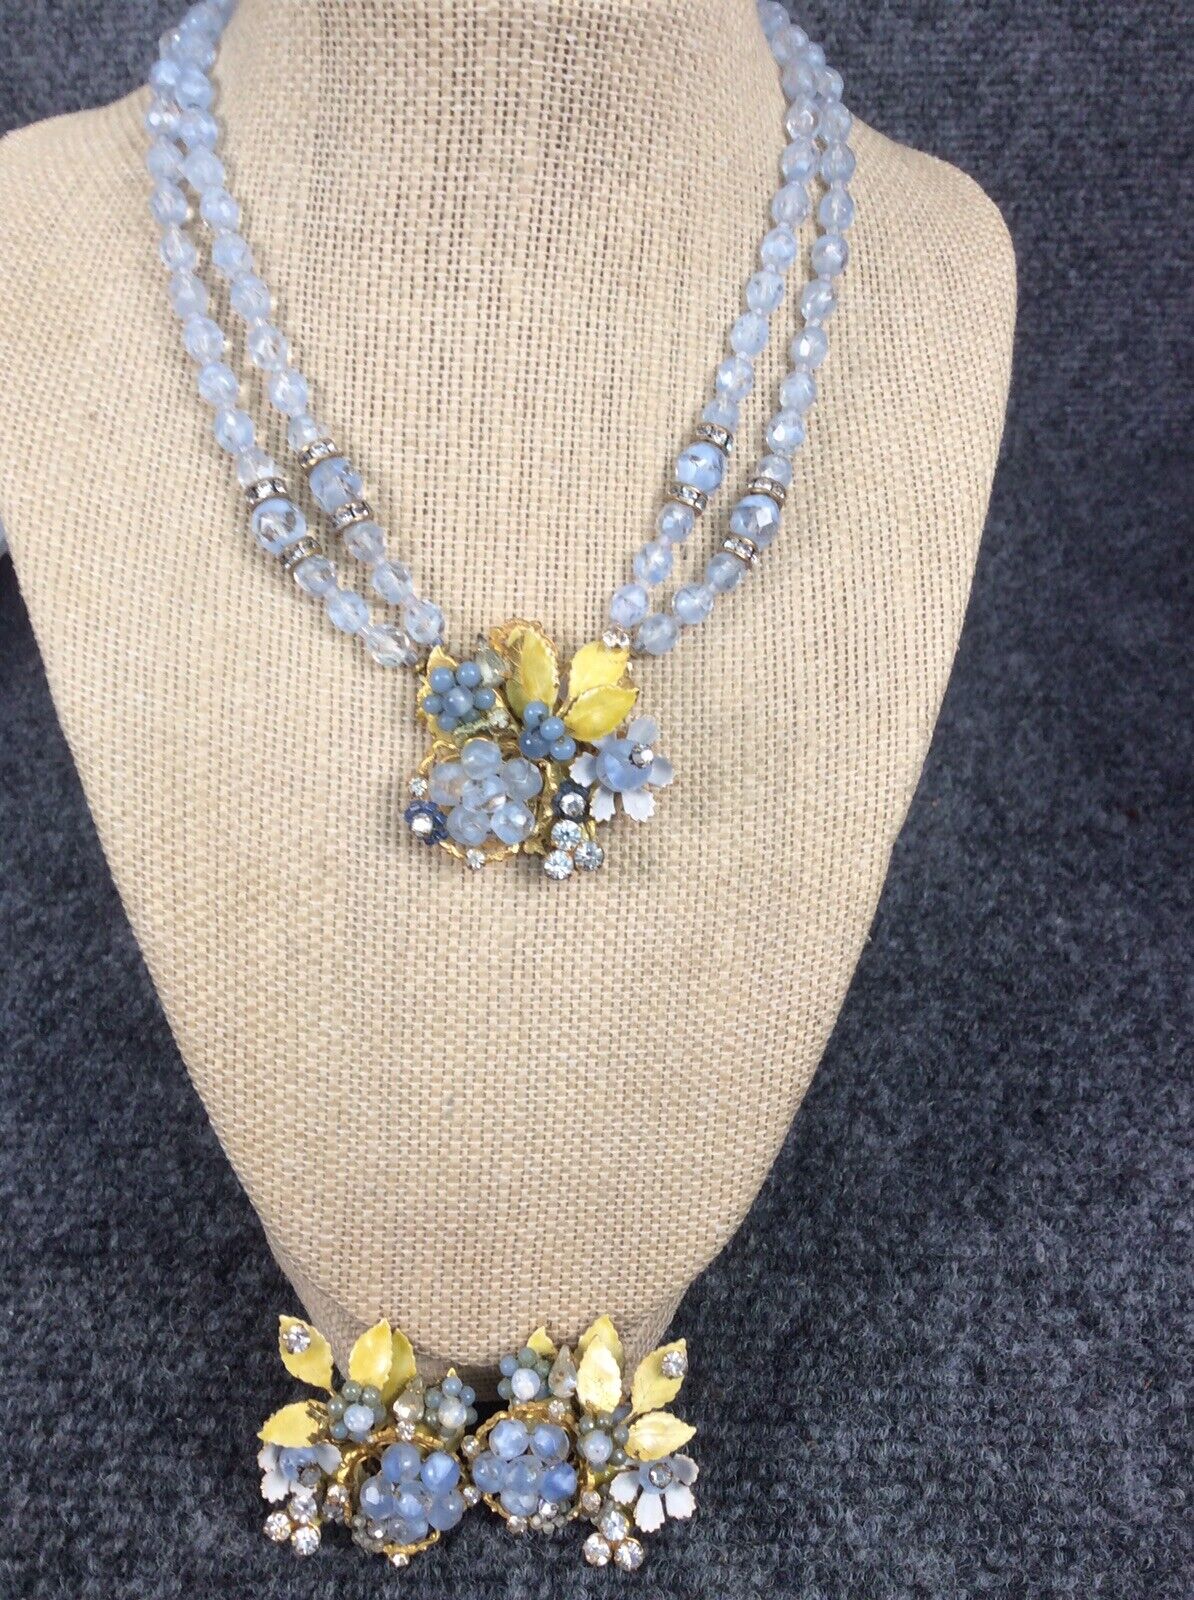 Vintage original by Robert blue glass crystals enamel necklace earrings set